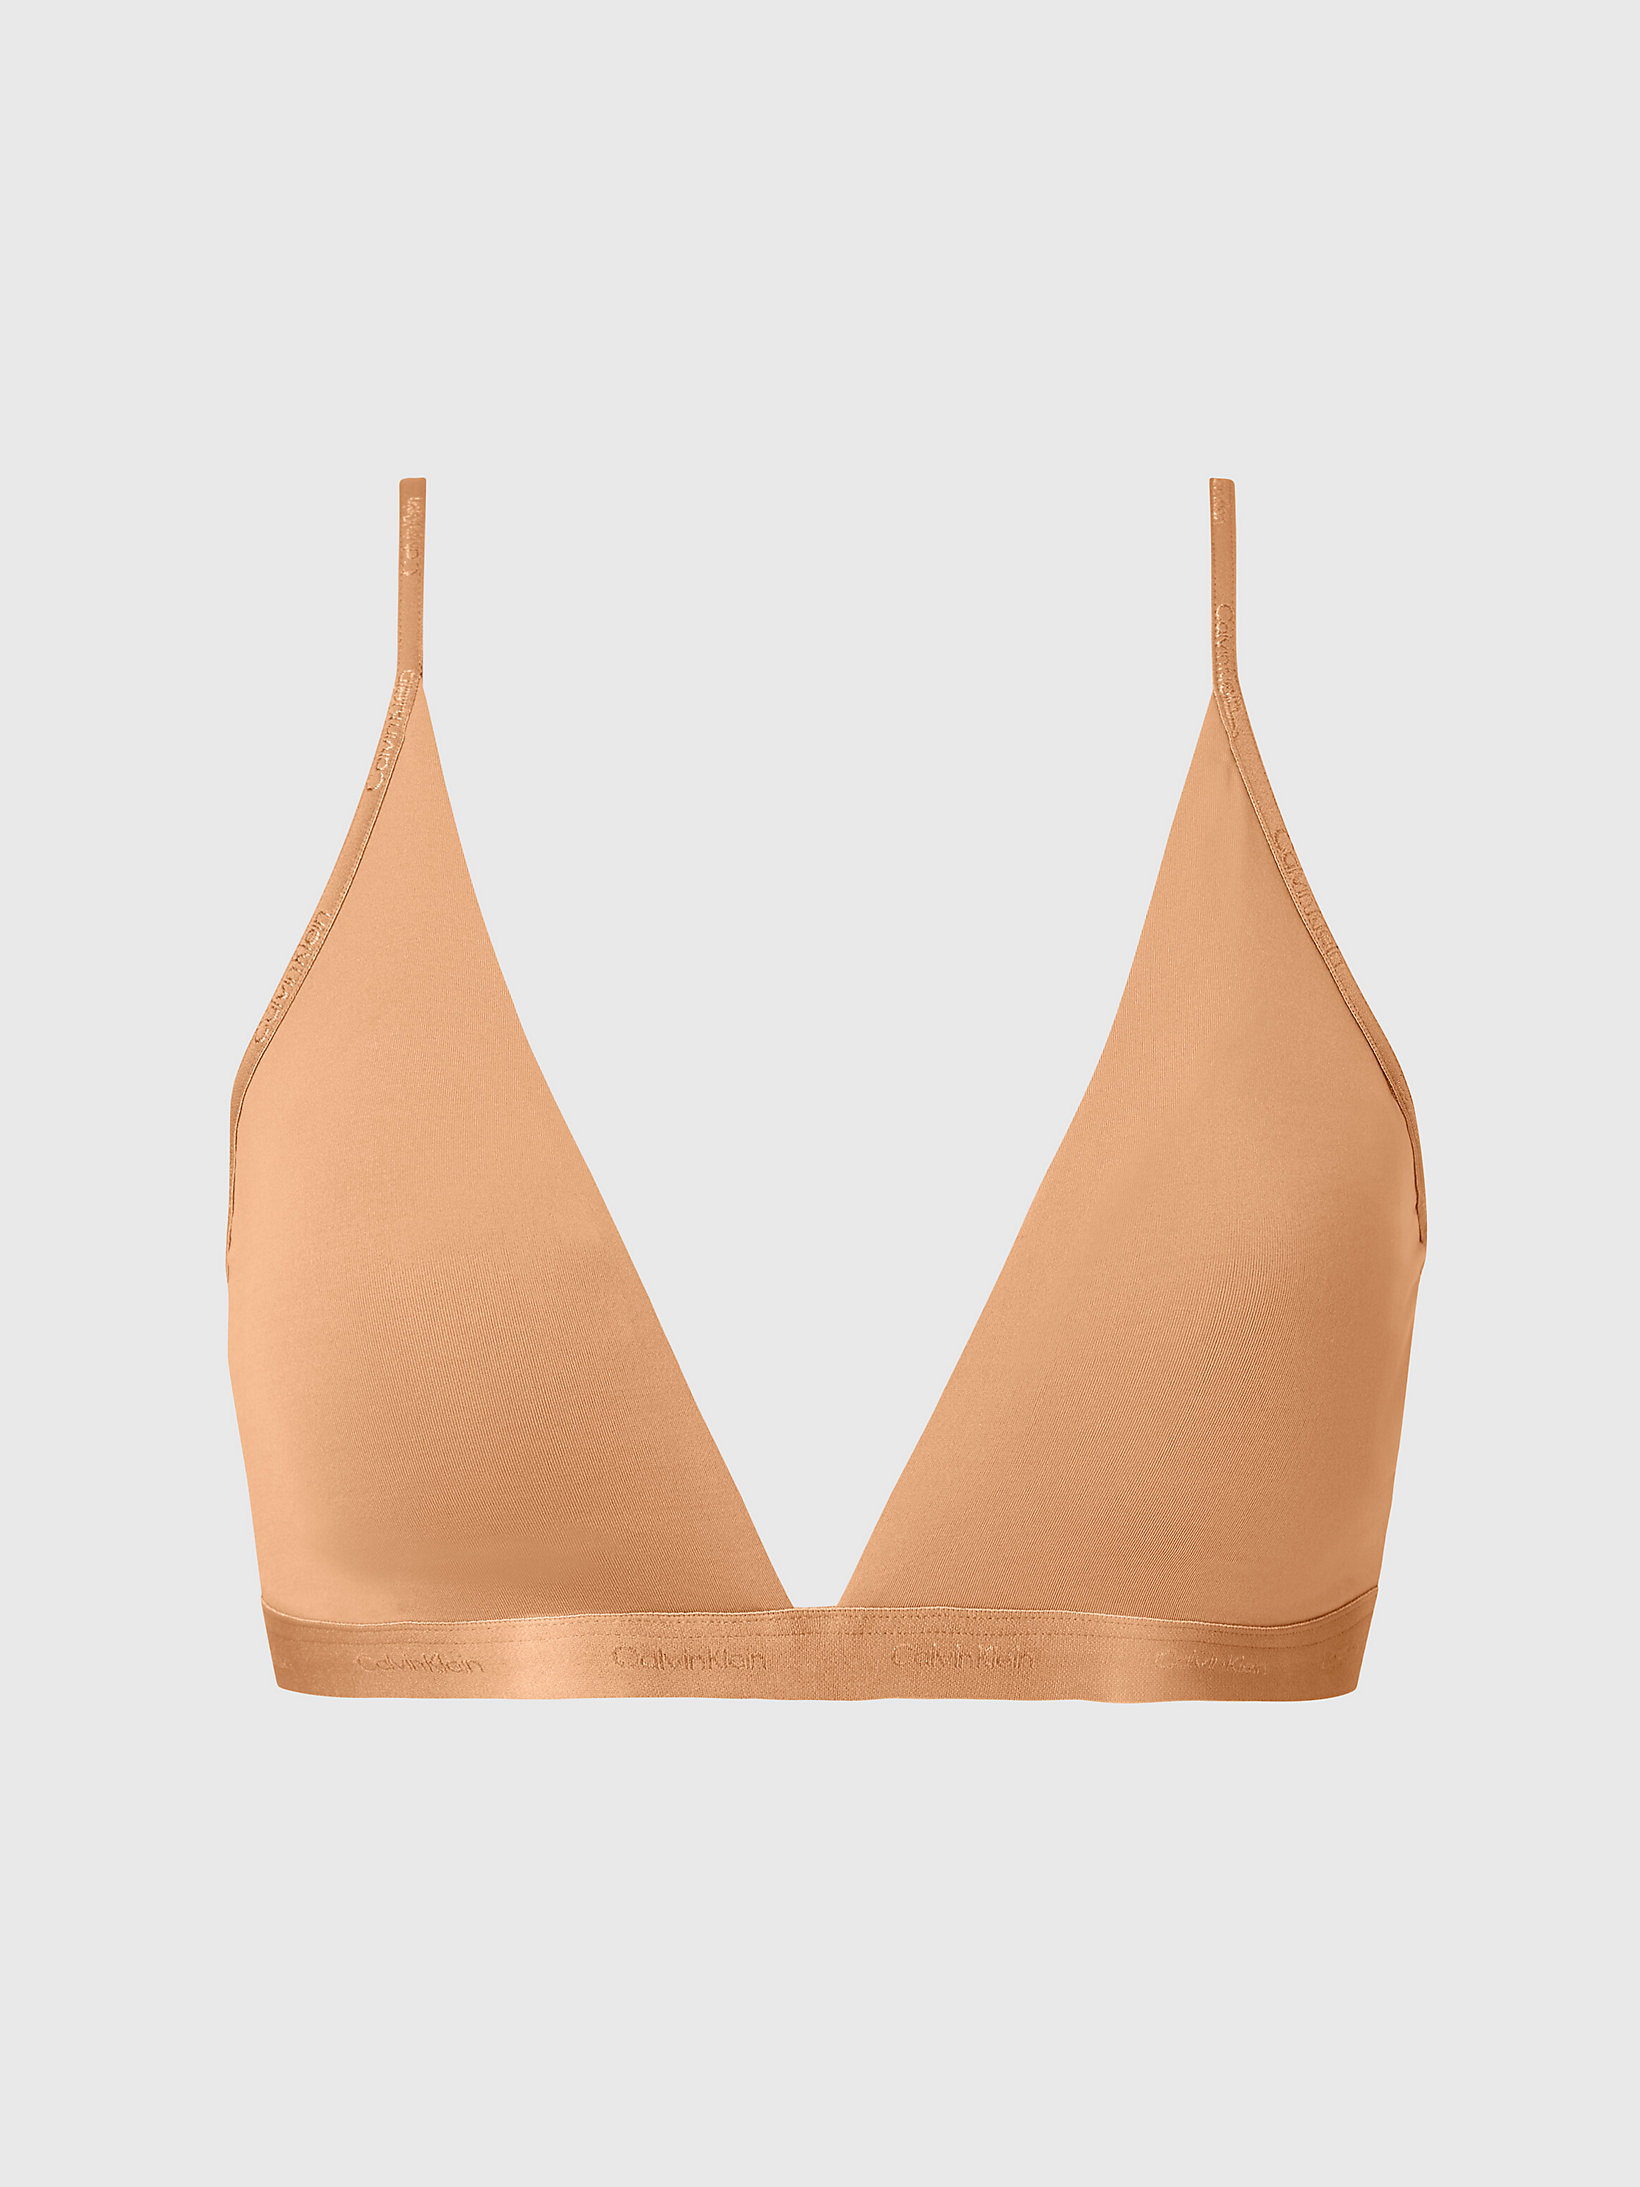 Sandalwood Triangle Bra - Form To Body undefined women Calvin Klein